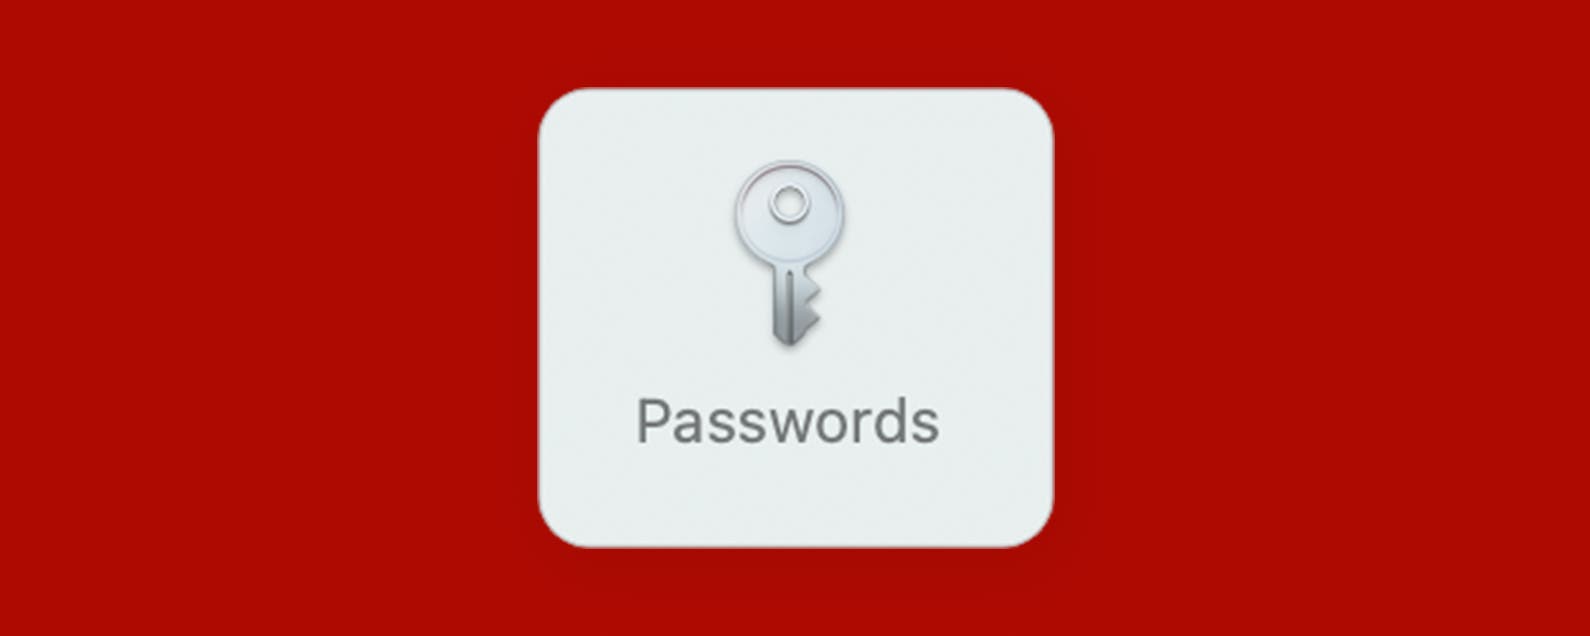 Different password